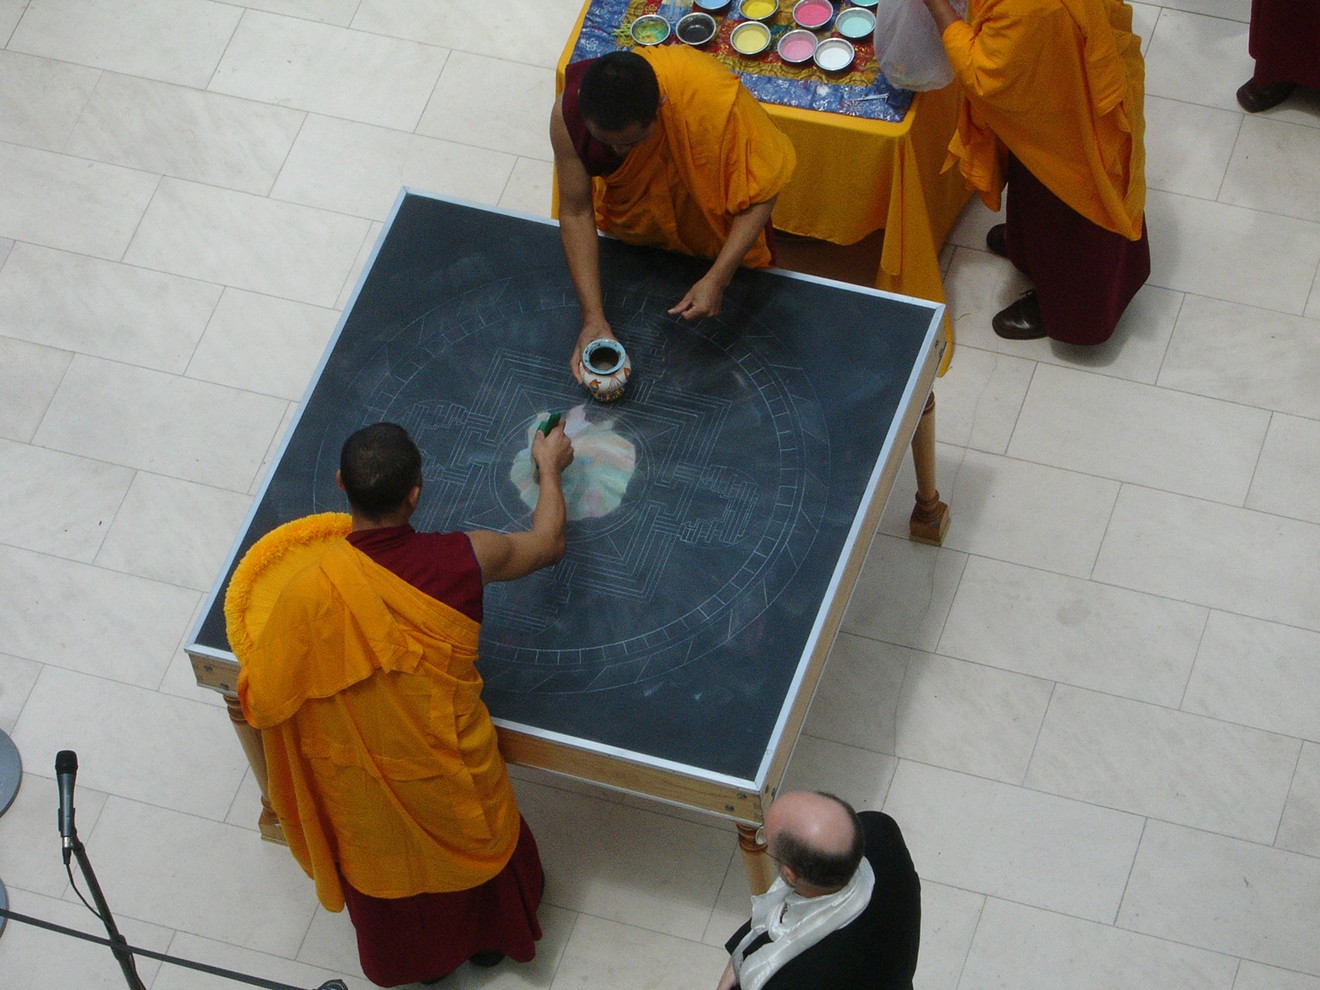 Tibetan Monks closing ceremony